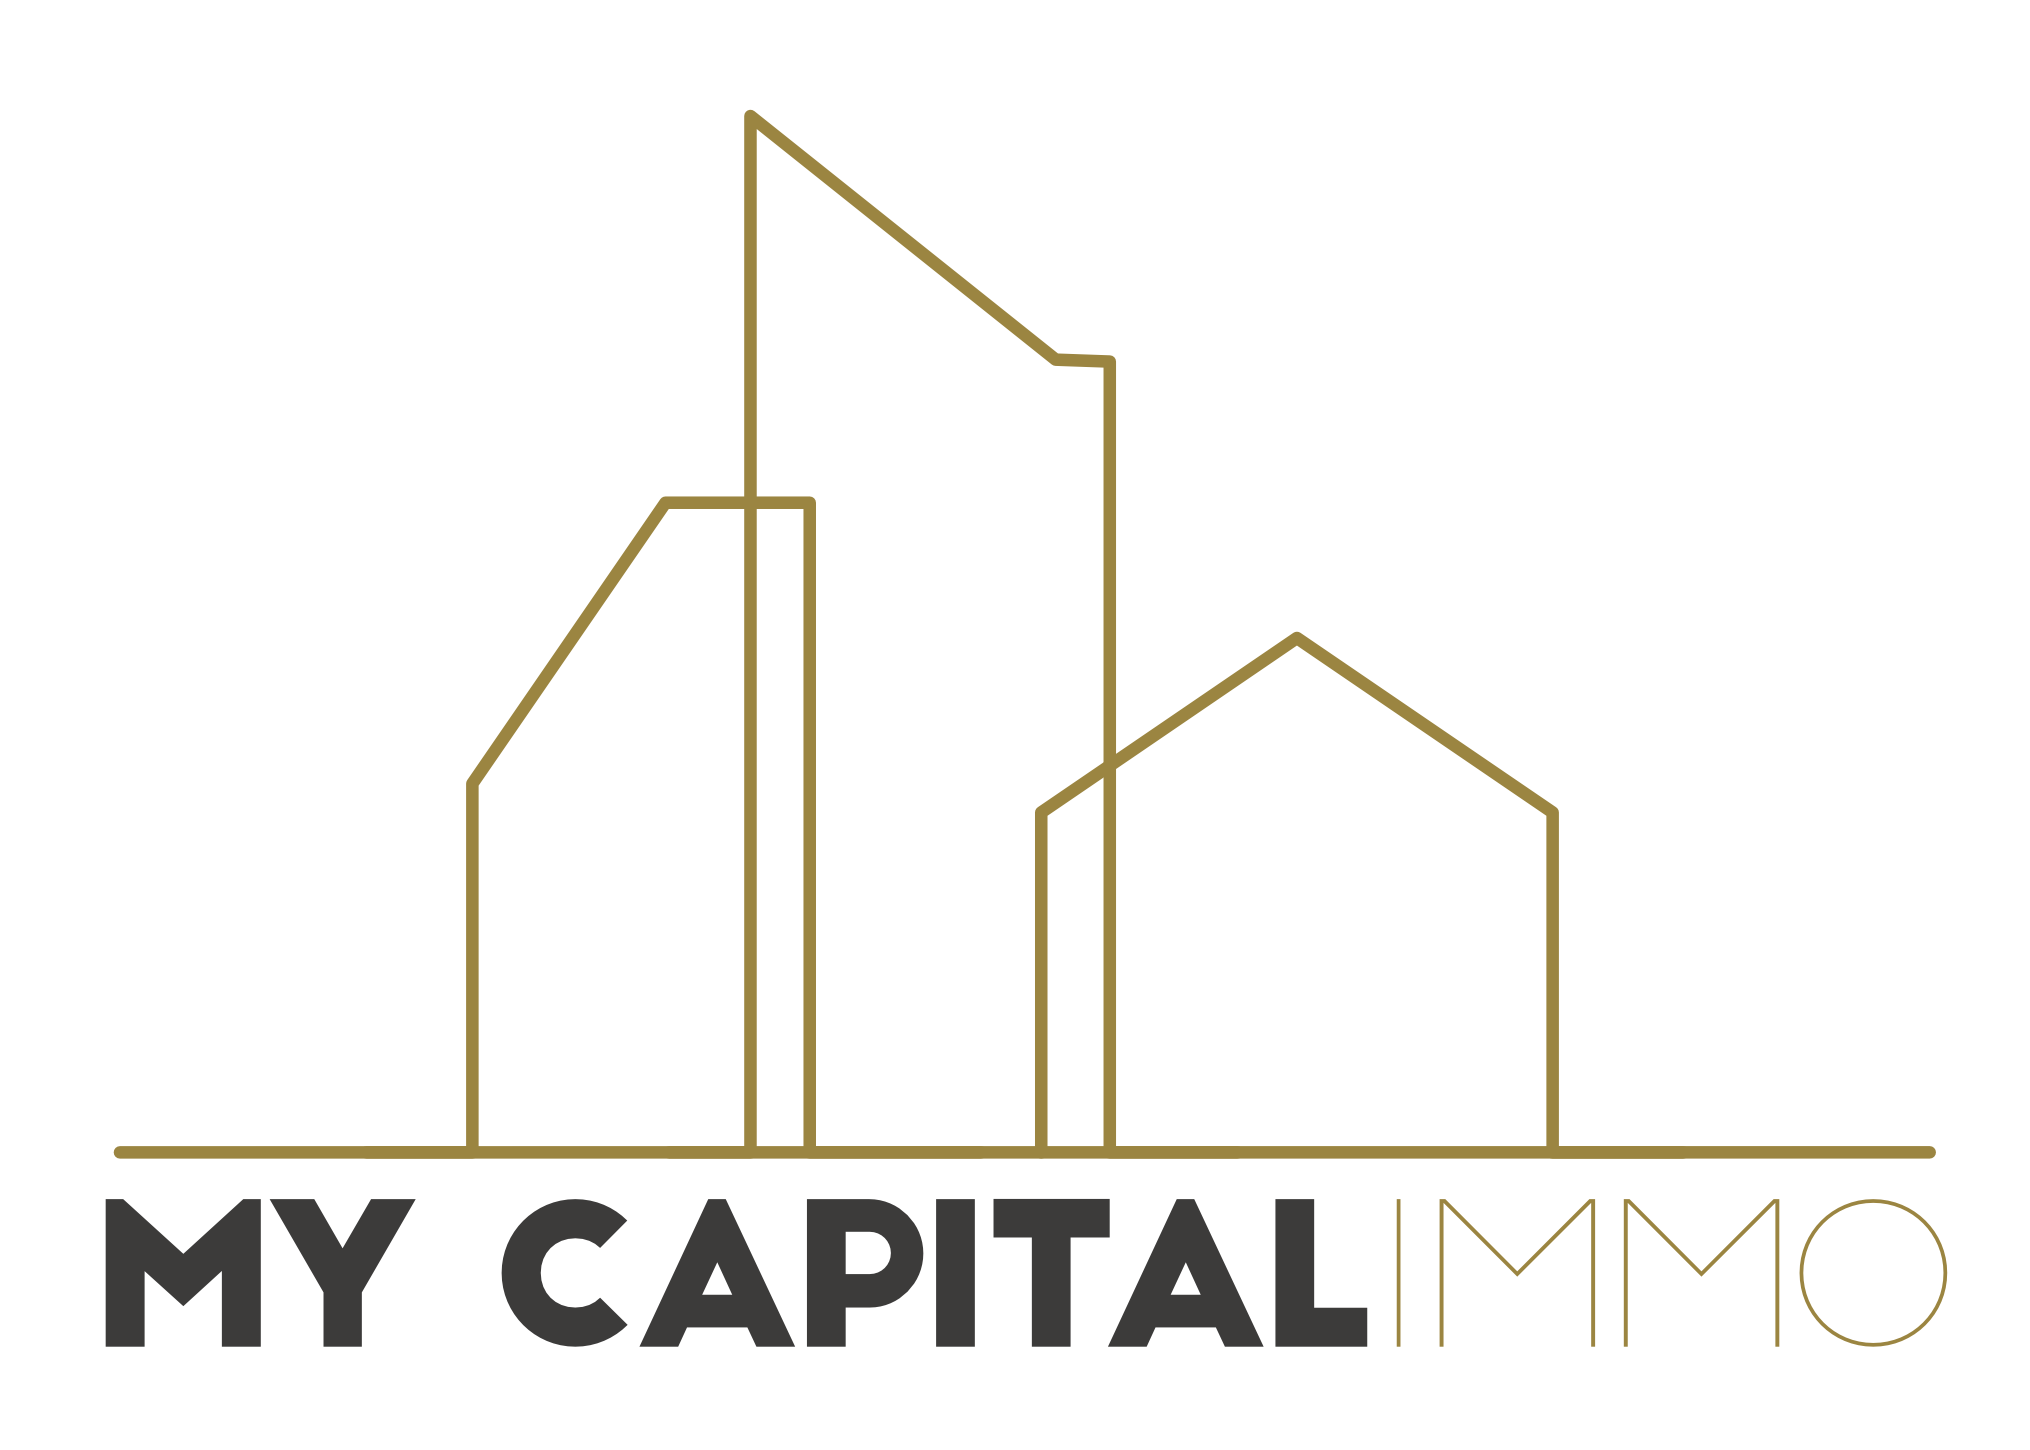 My Capital Immo site de financement participatif - Equity Crowdfunding